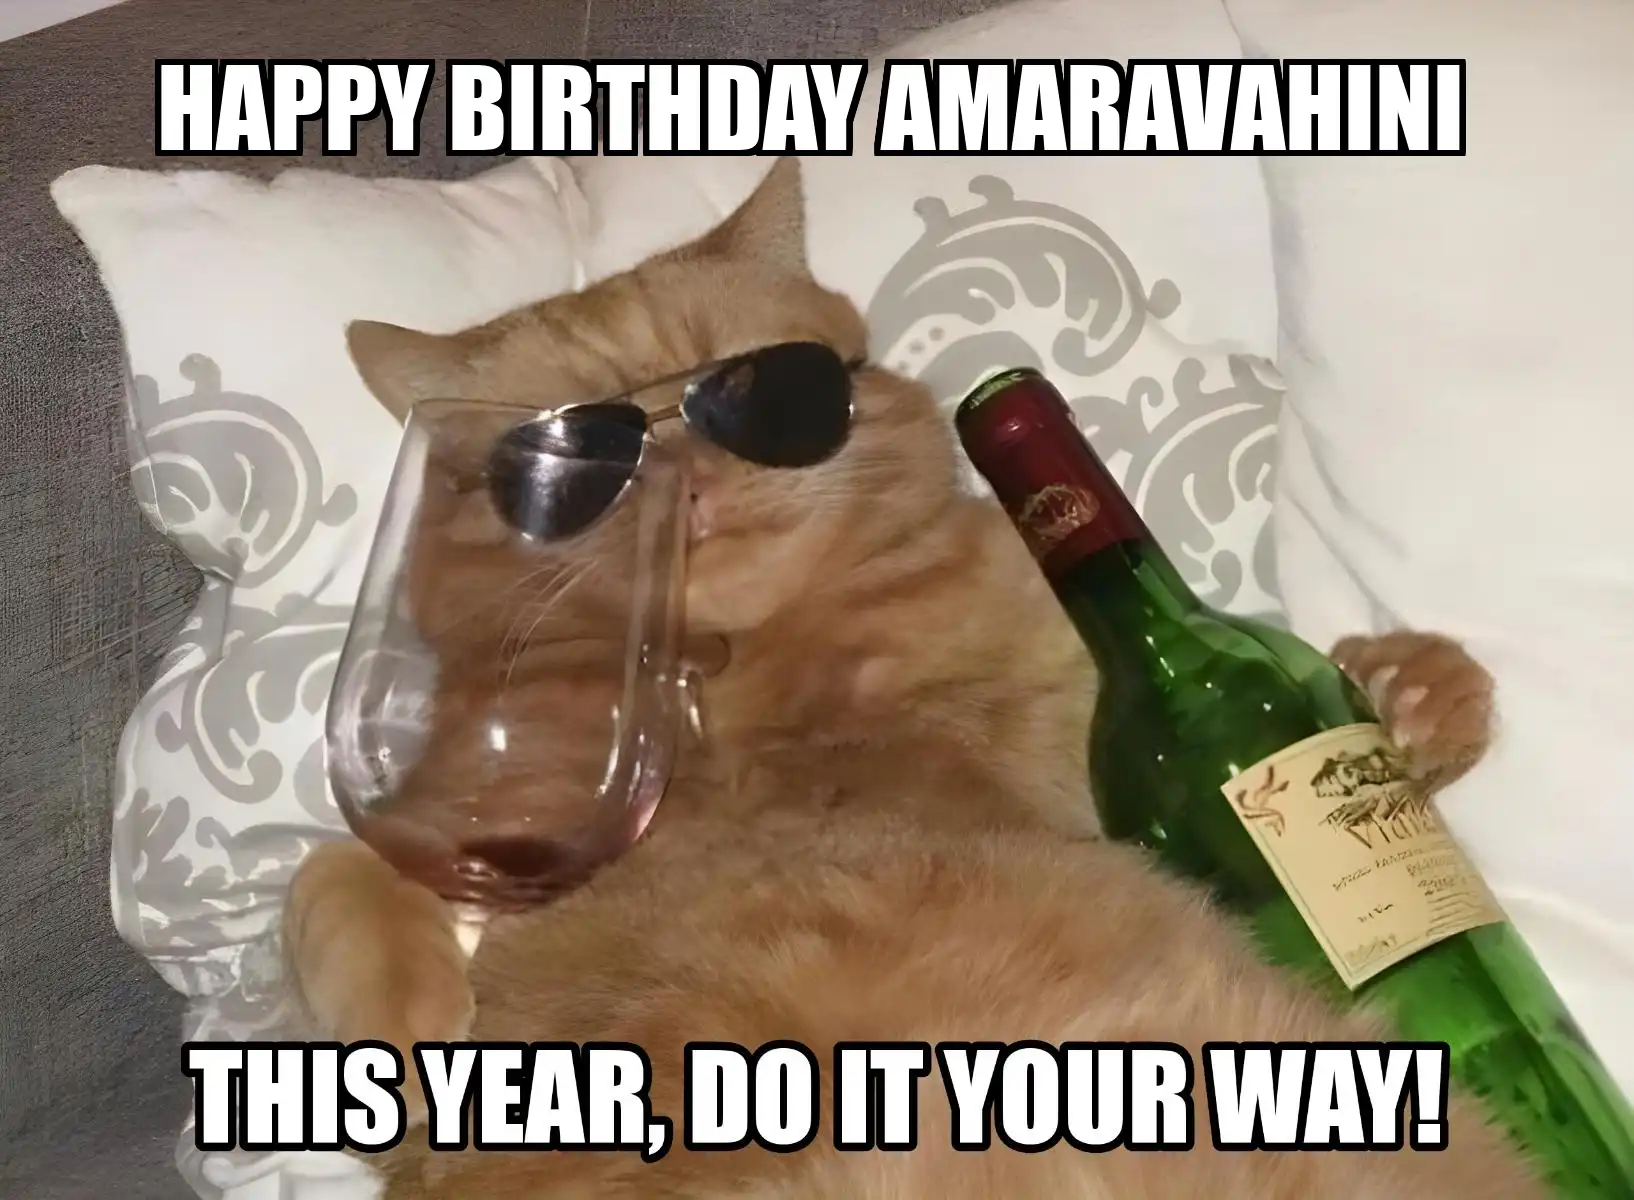 Happy Birthday Amaravahini This Year Do It Your Way Meme